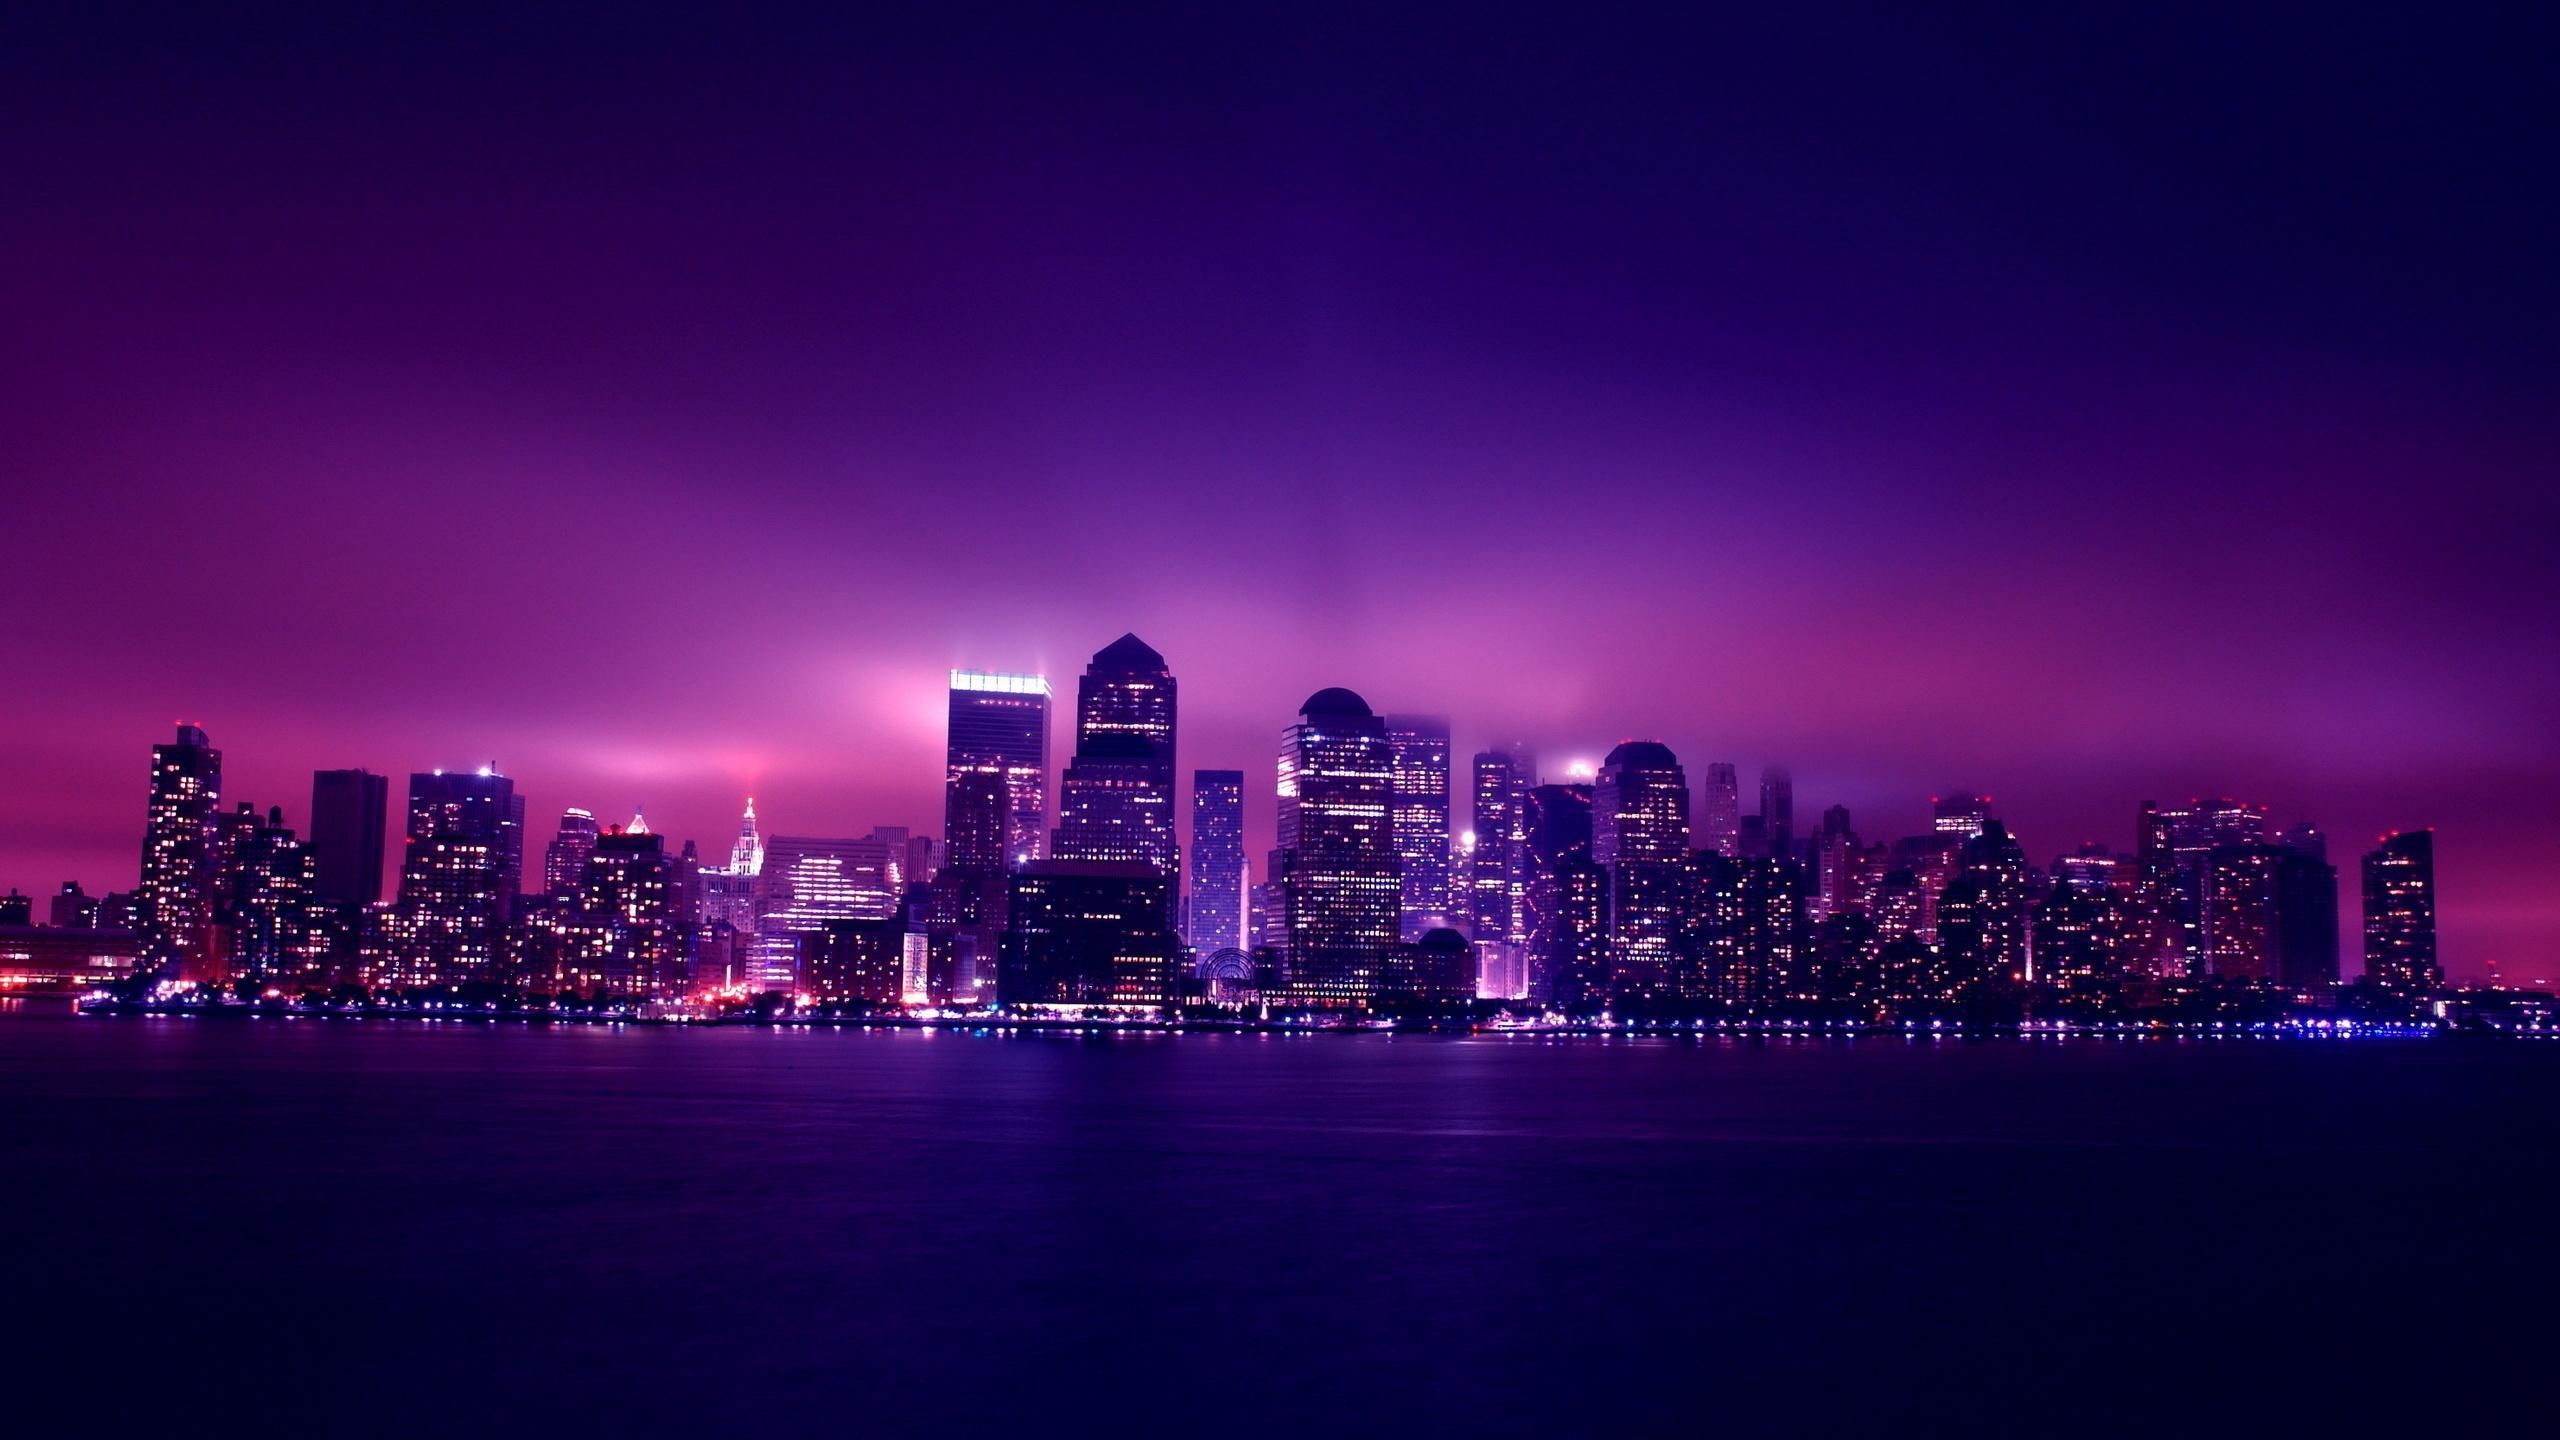 Aesthetic City Night Lights In 2560x1440 Resolution. Night city